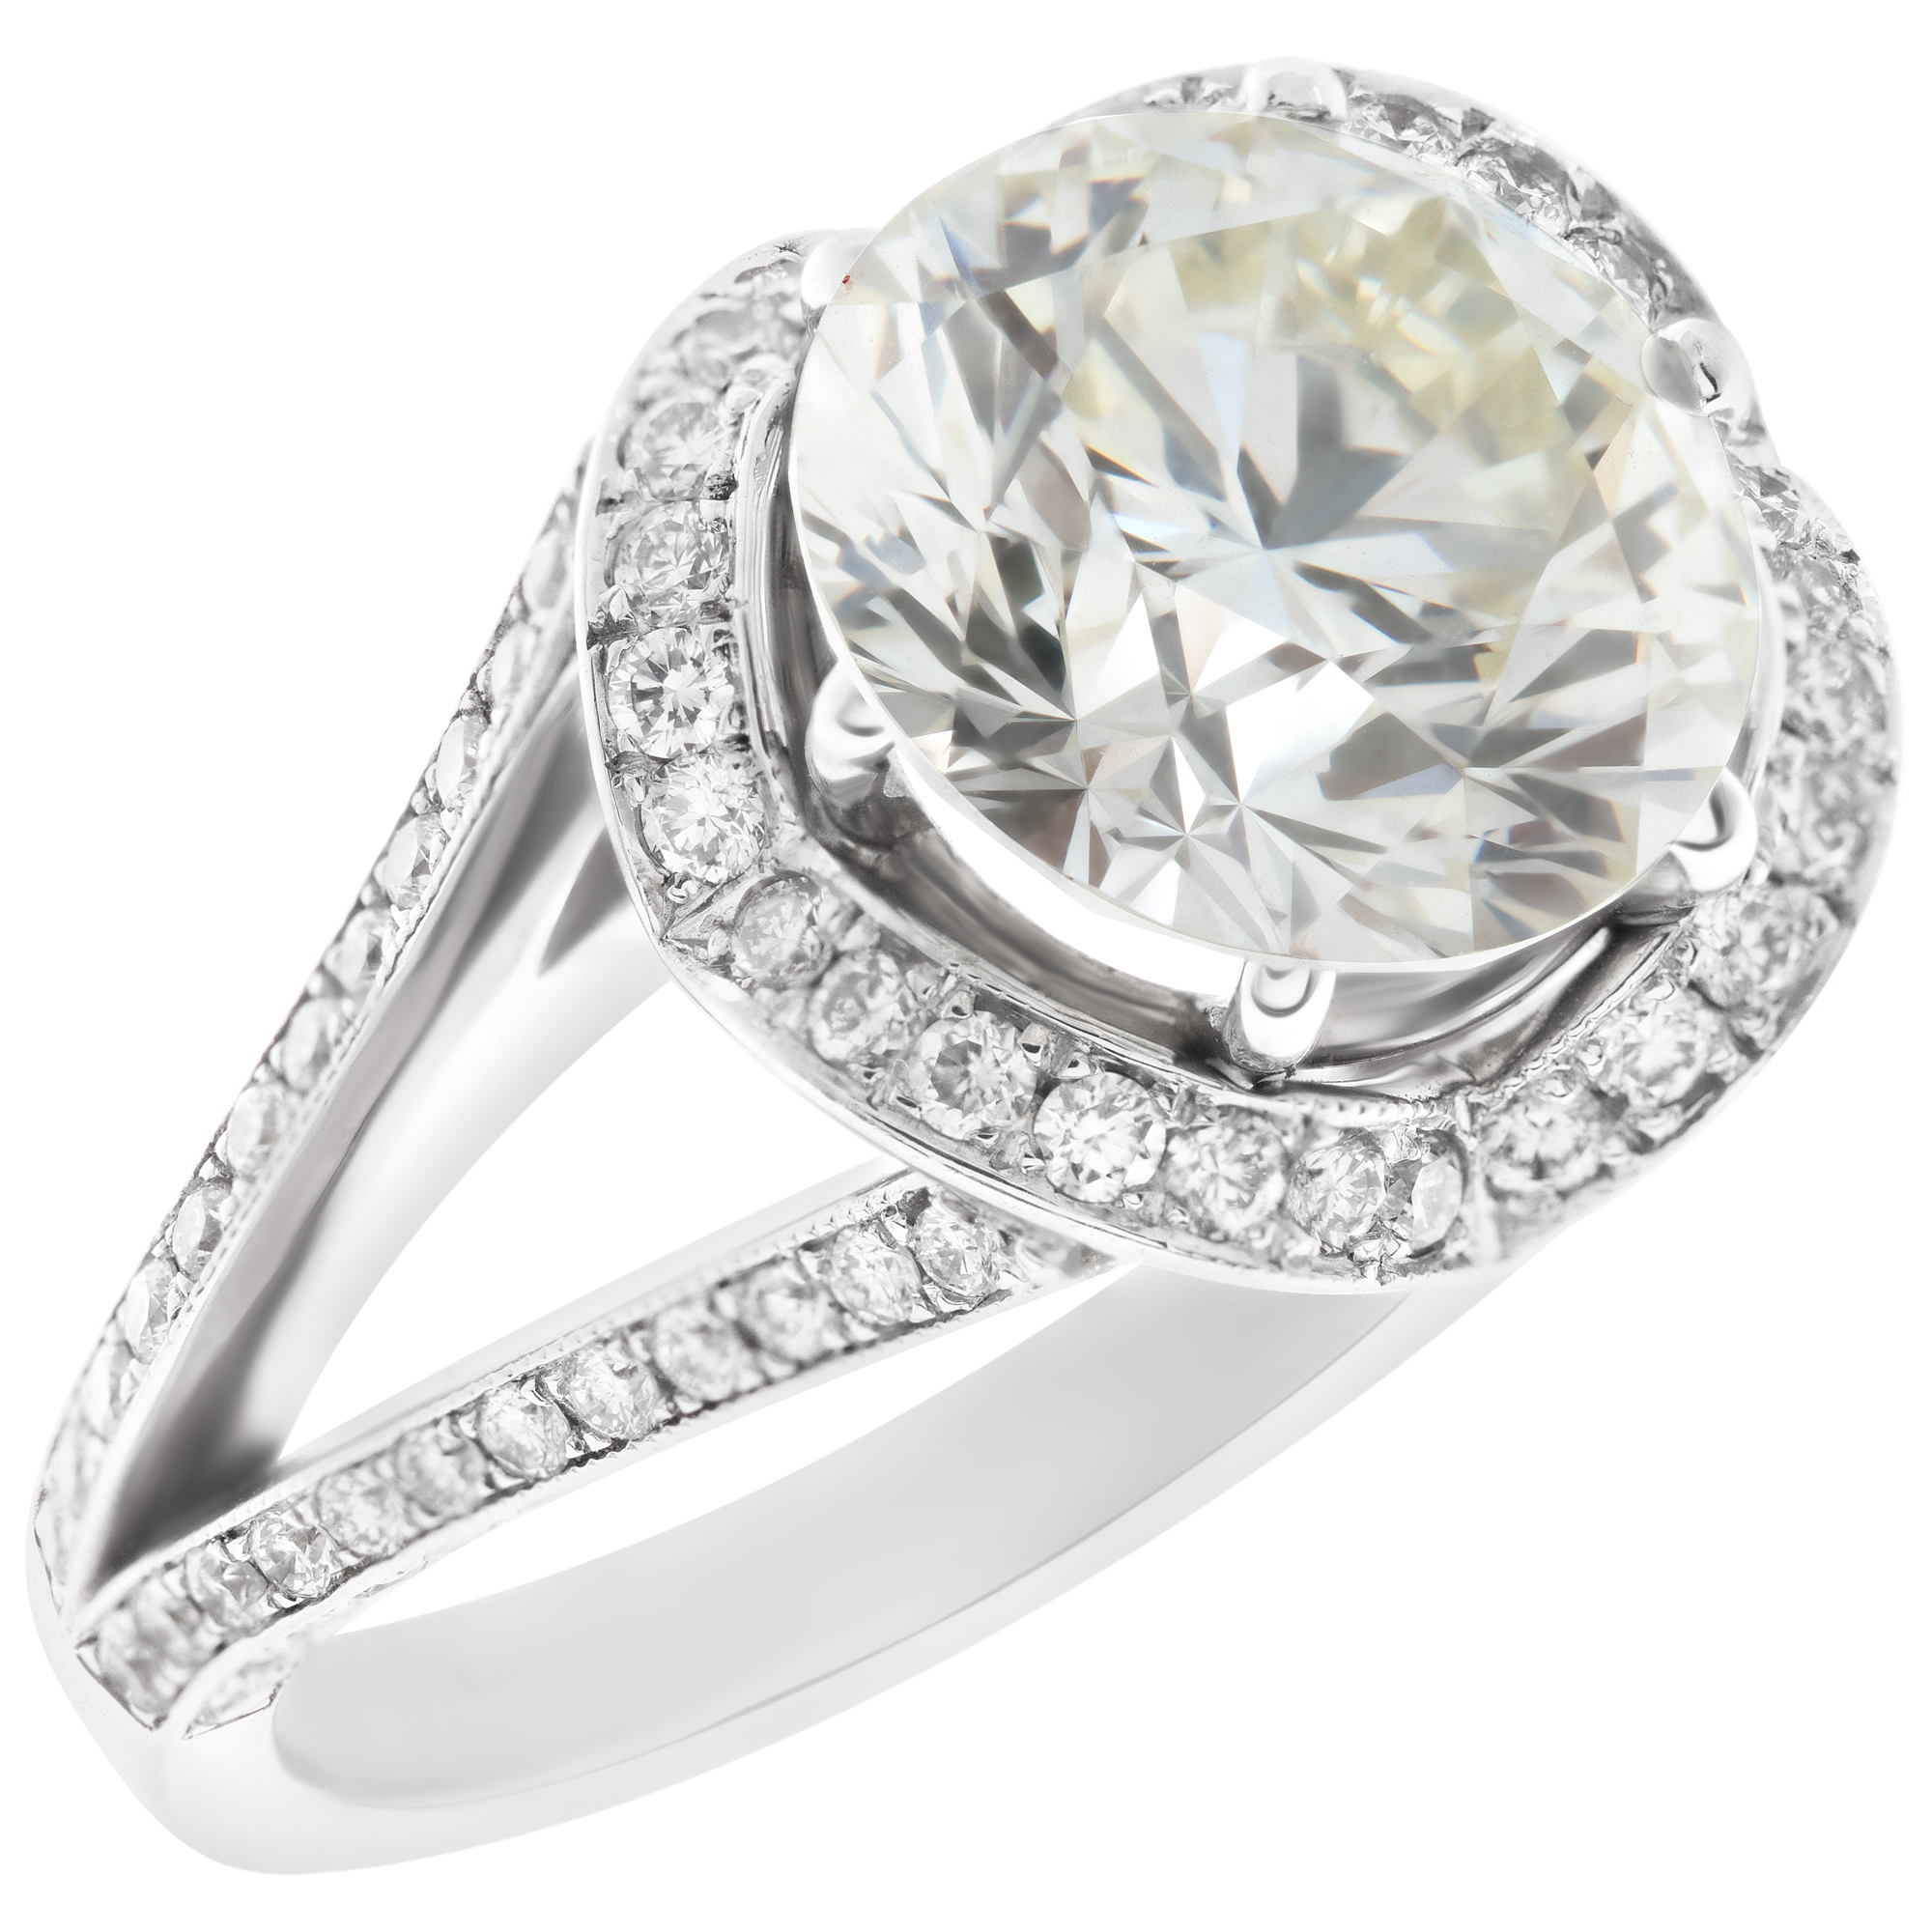 GIA certified round brilliant cut diamond 4.04 carat (M color, VS1 clarity) ring image 3